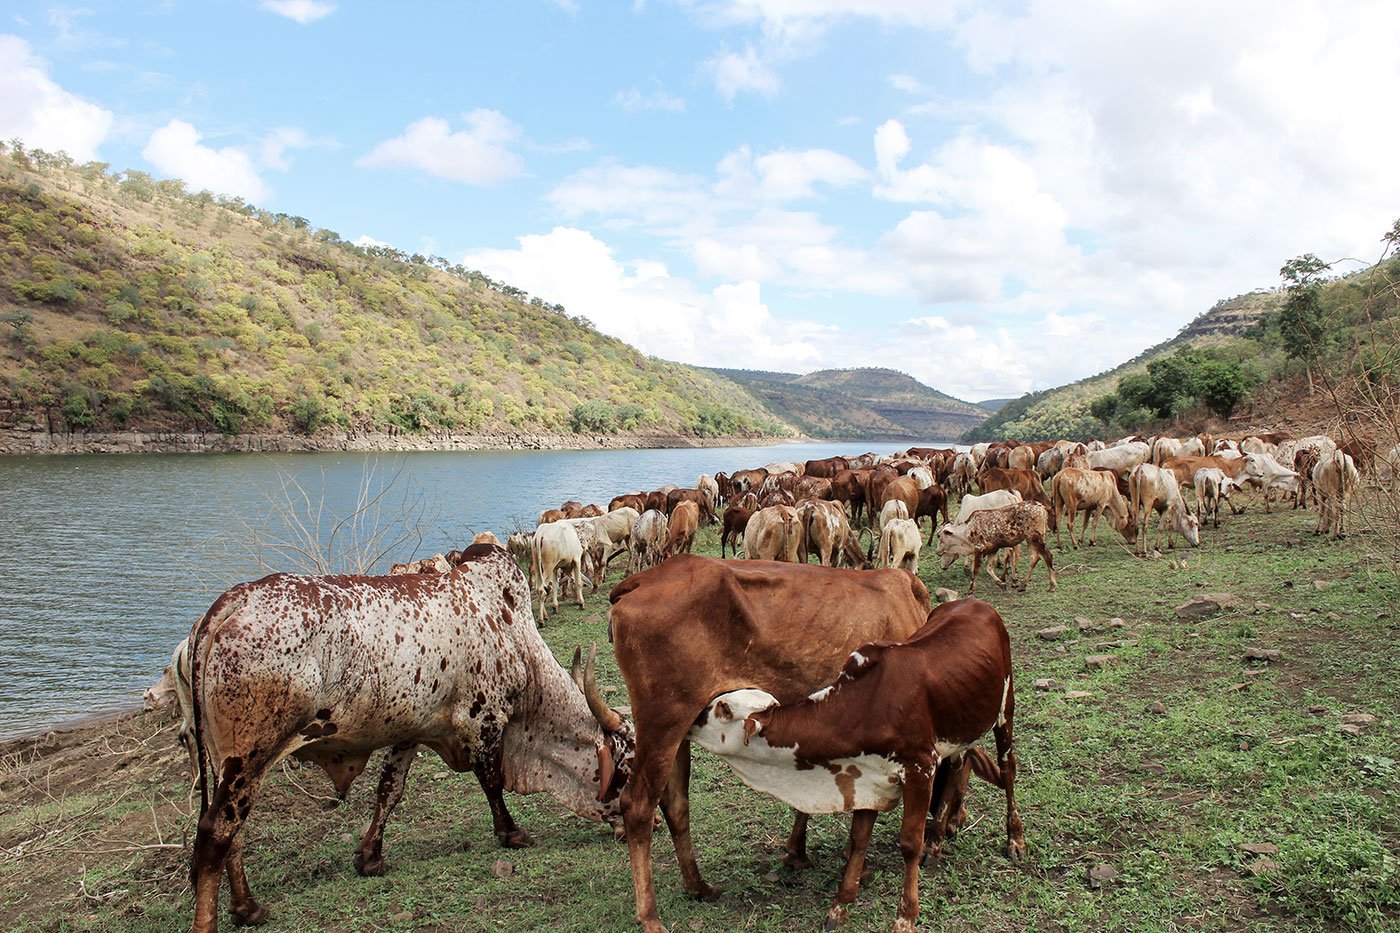 A herd of cattle grazing